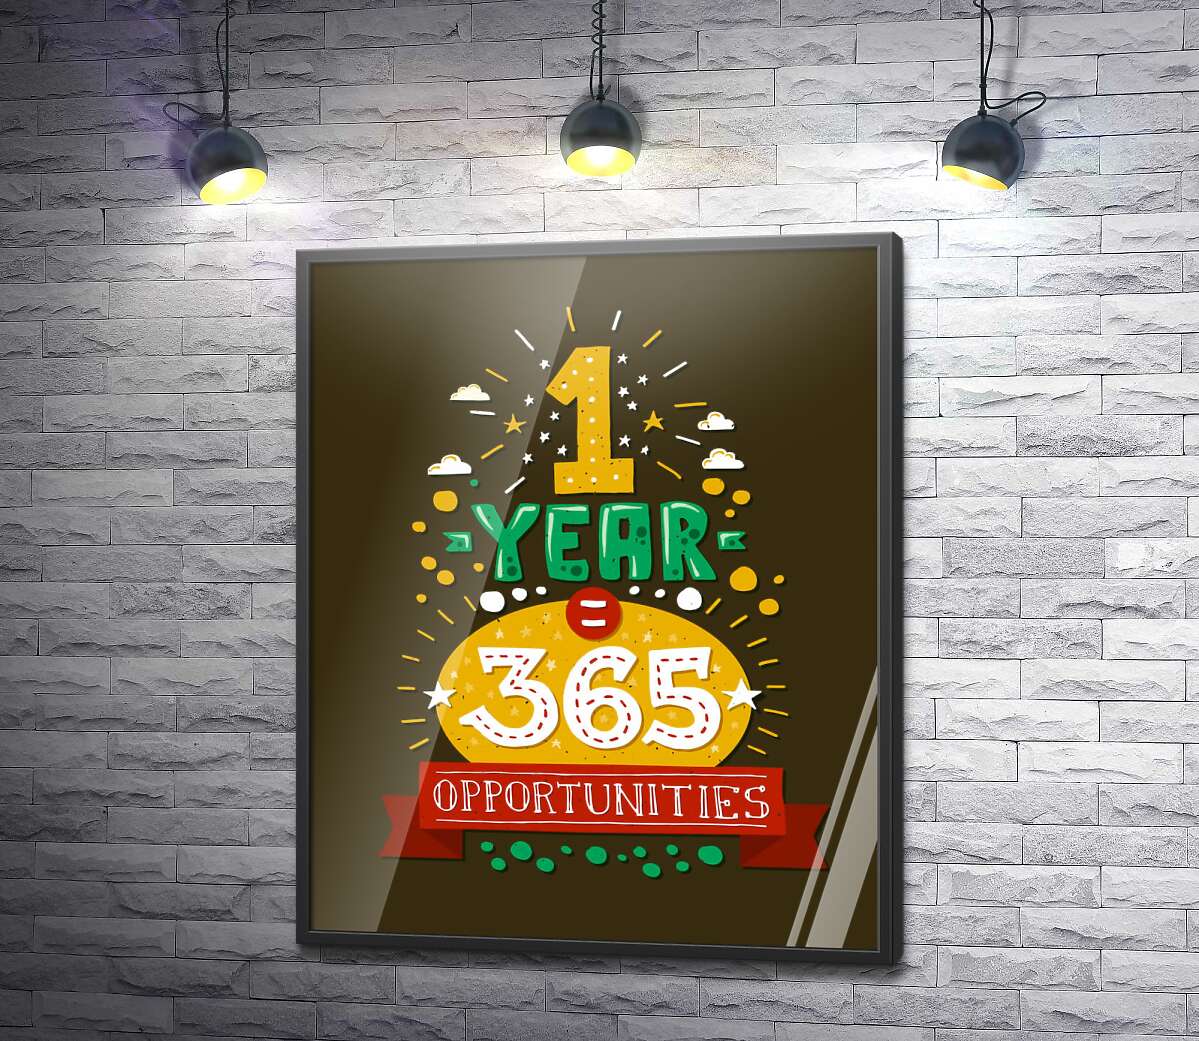 постер Мотивационная надпись: "1 year = 365 opportunities"